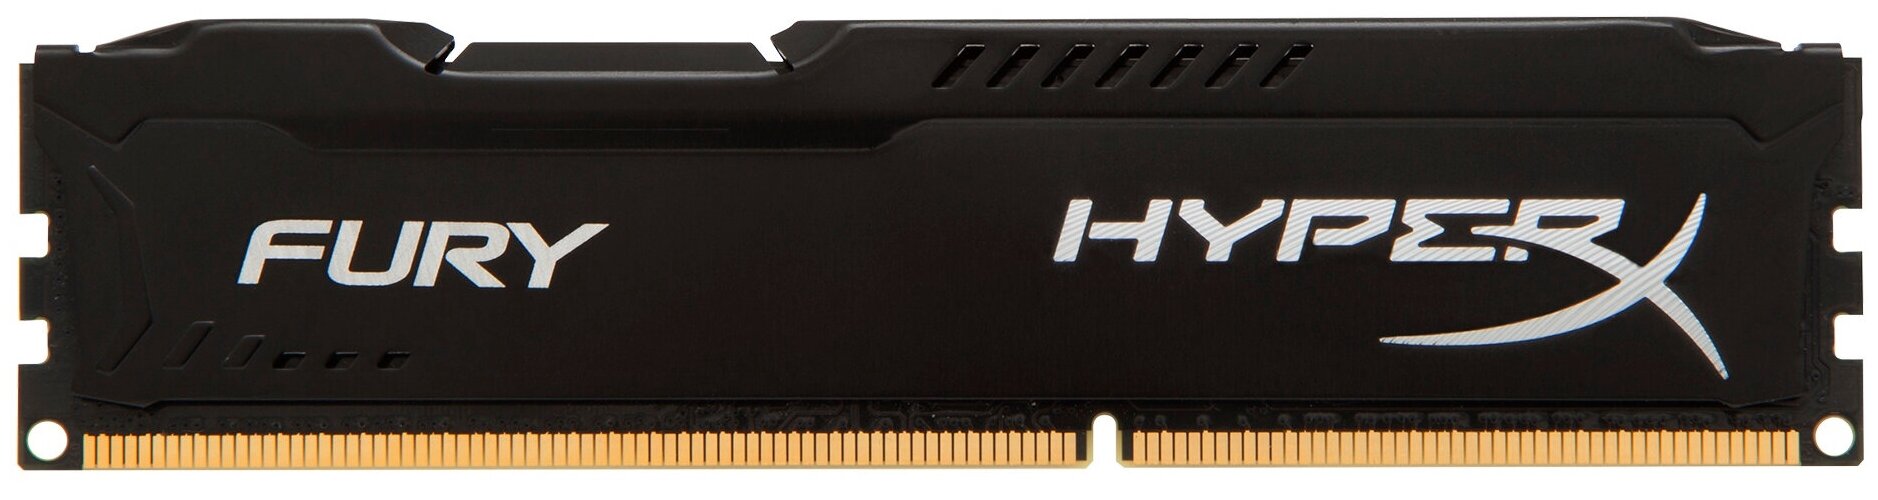 Оперативная память Kingston HyperX FURY (HX318C10FB/8)